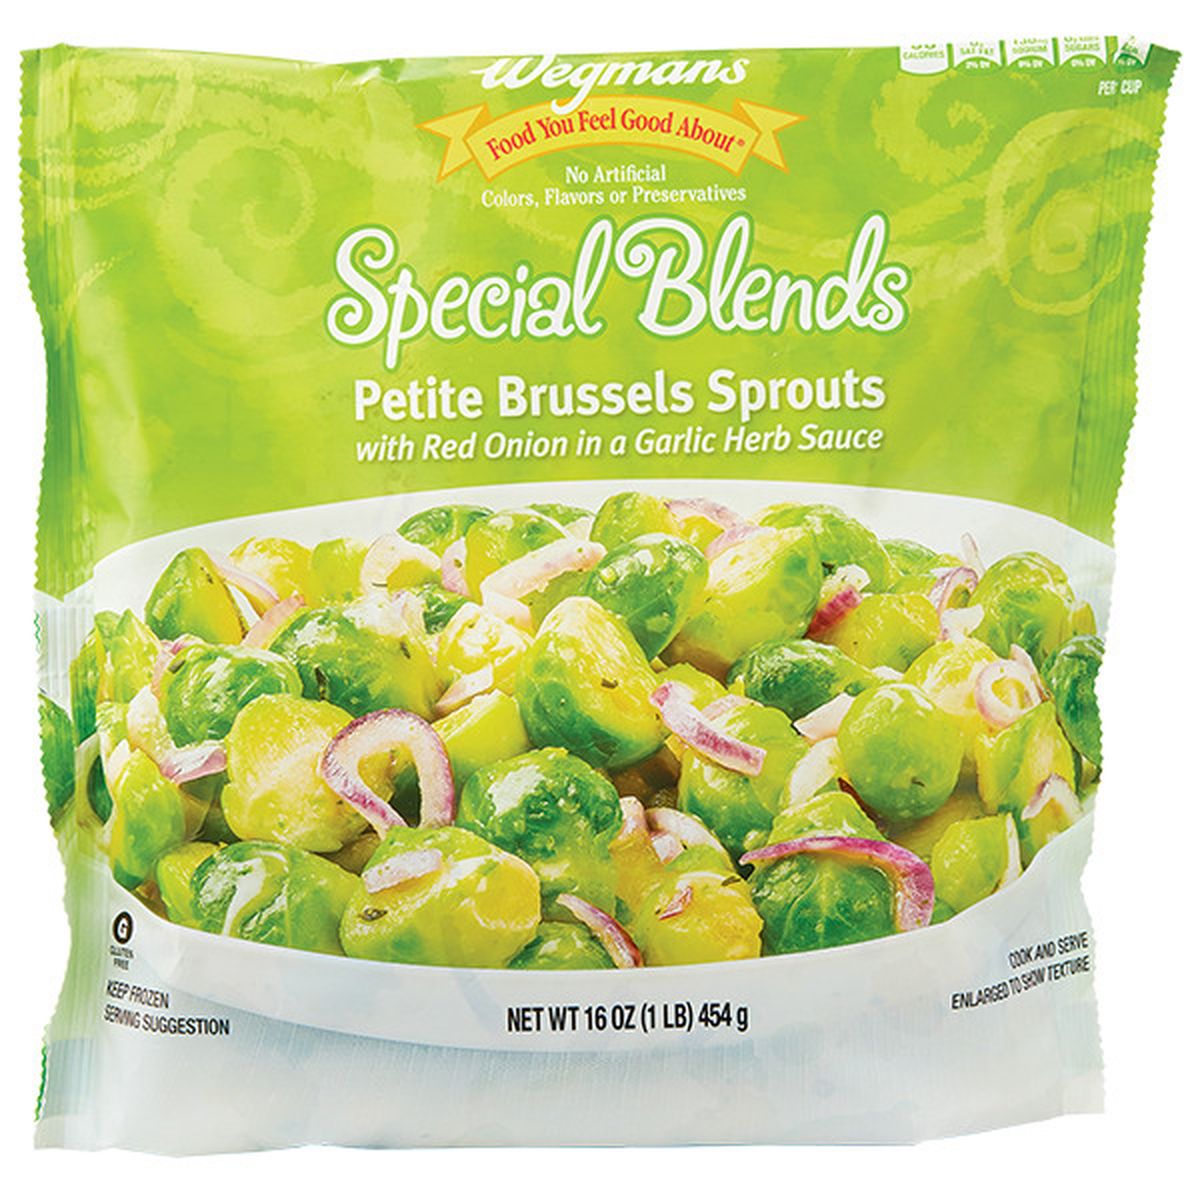 Calories in Wegmans Special Blends Frozen Petite Brussels Sprouts